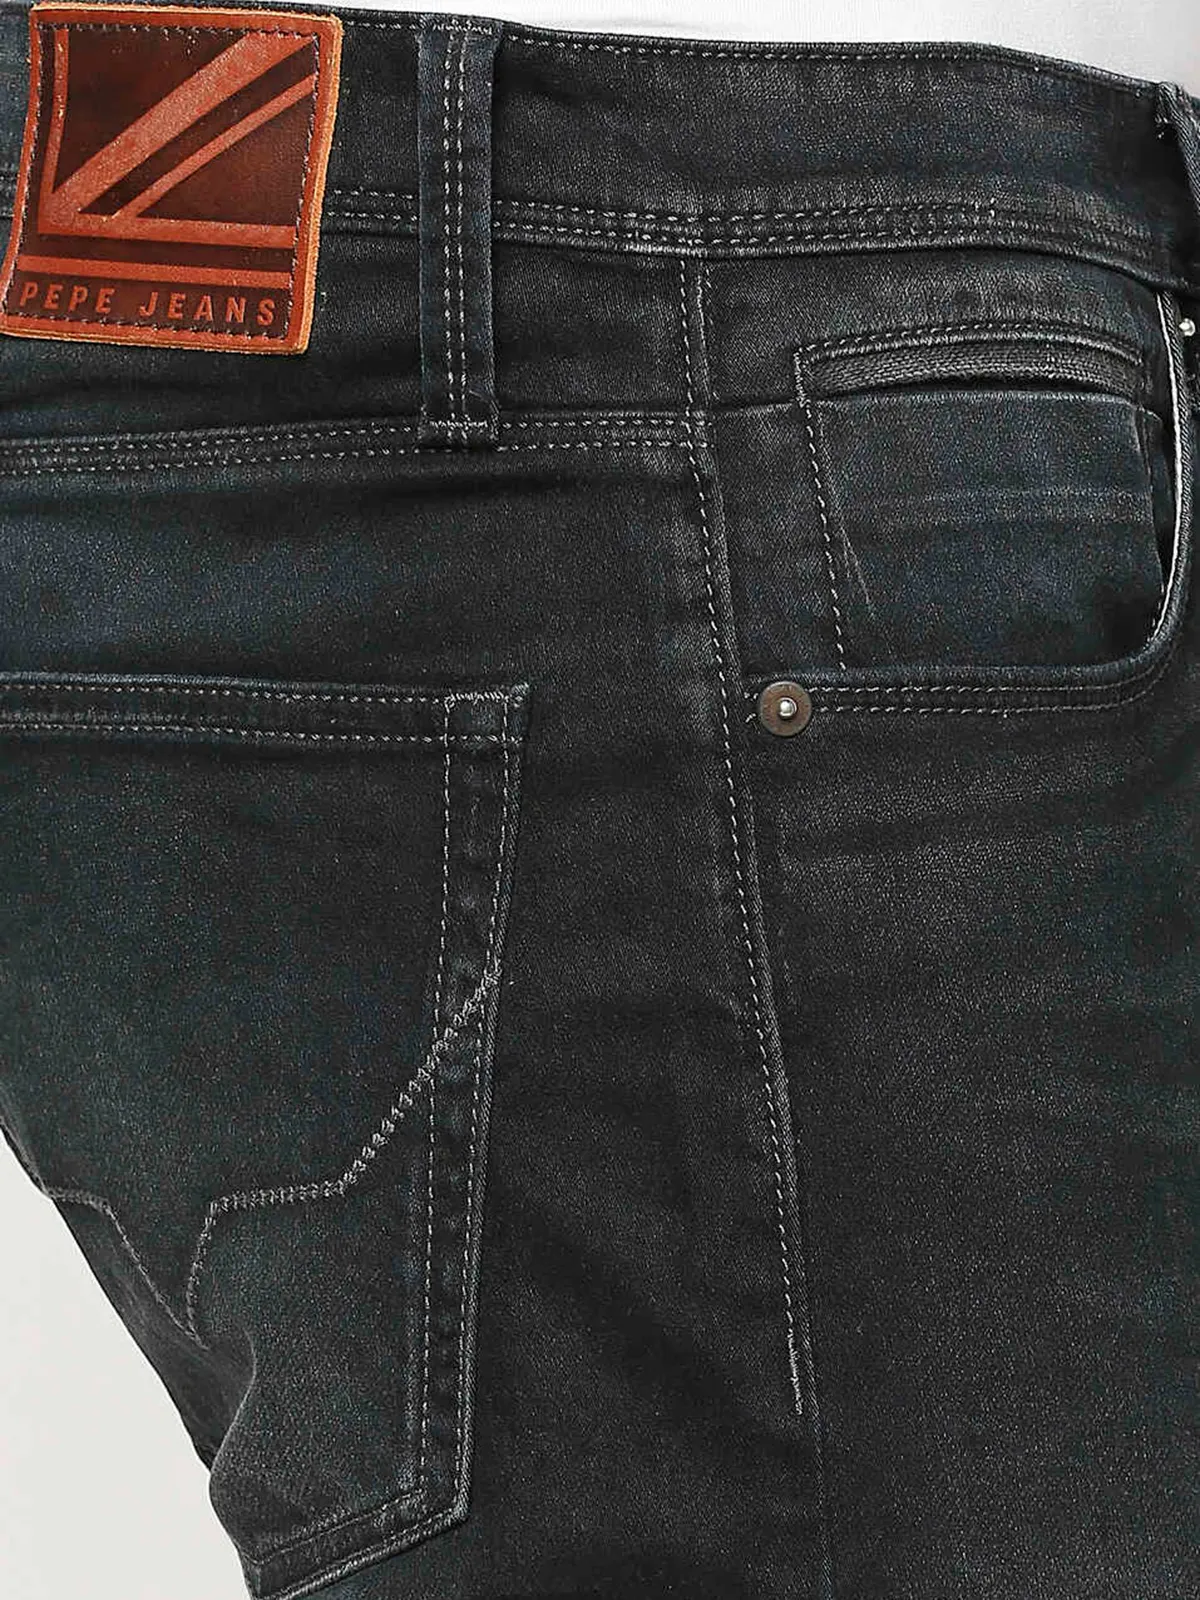 Pepe Jeans black denim slim fit jeans